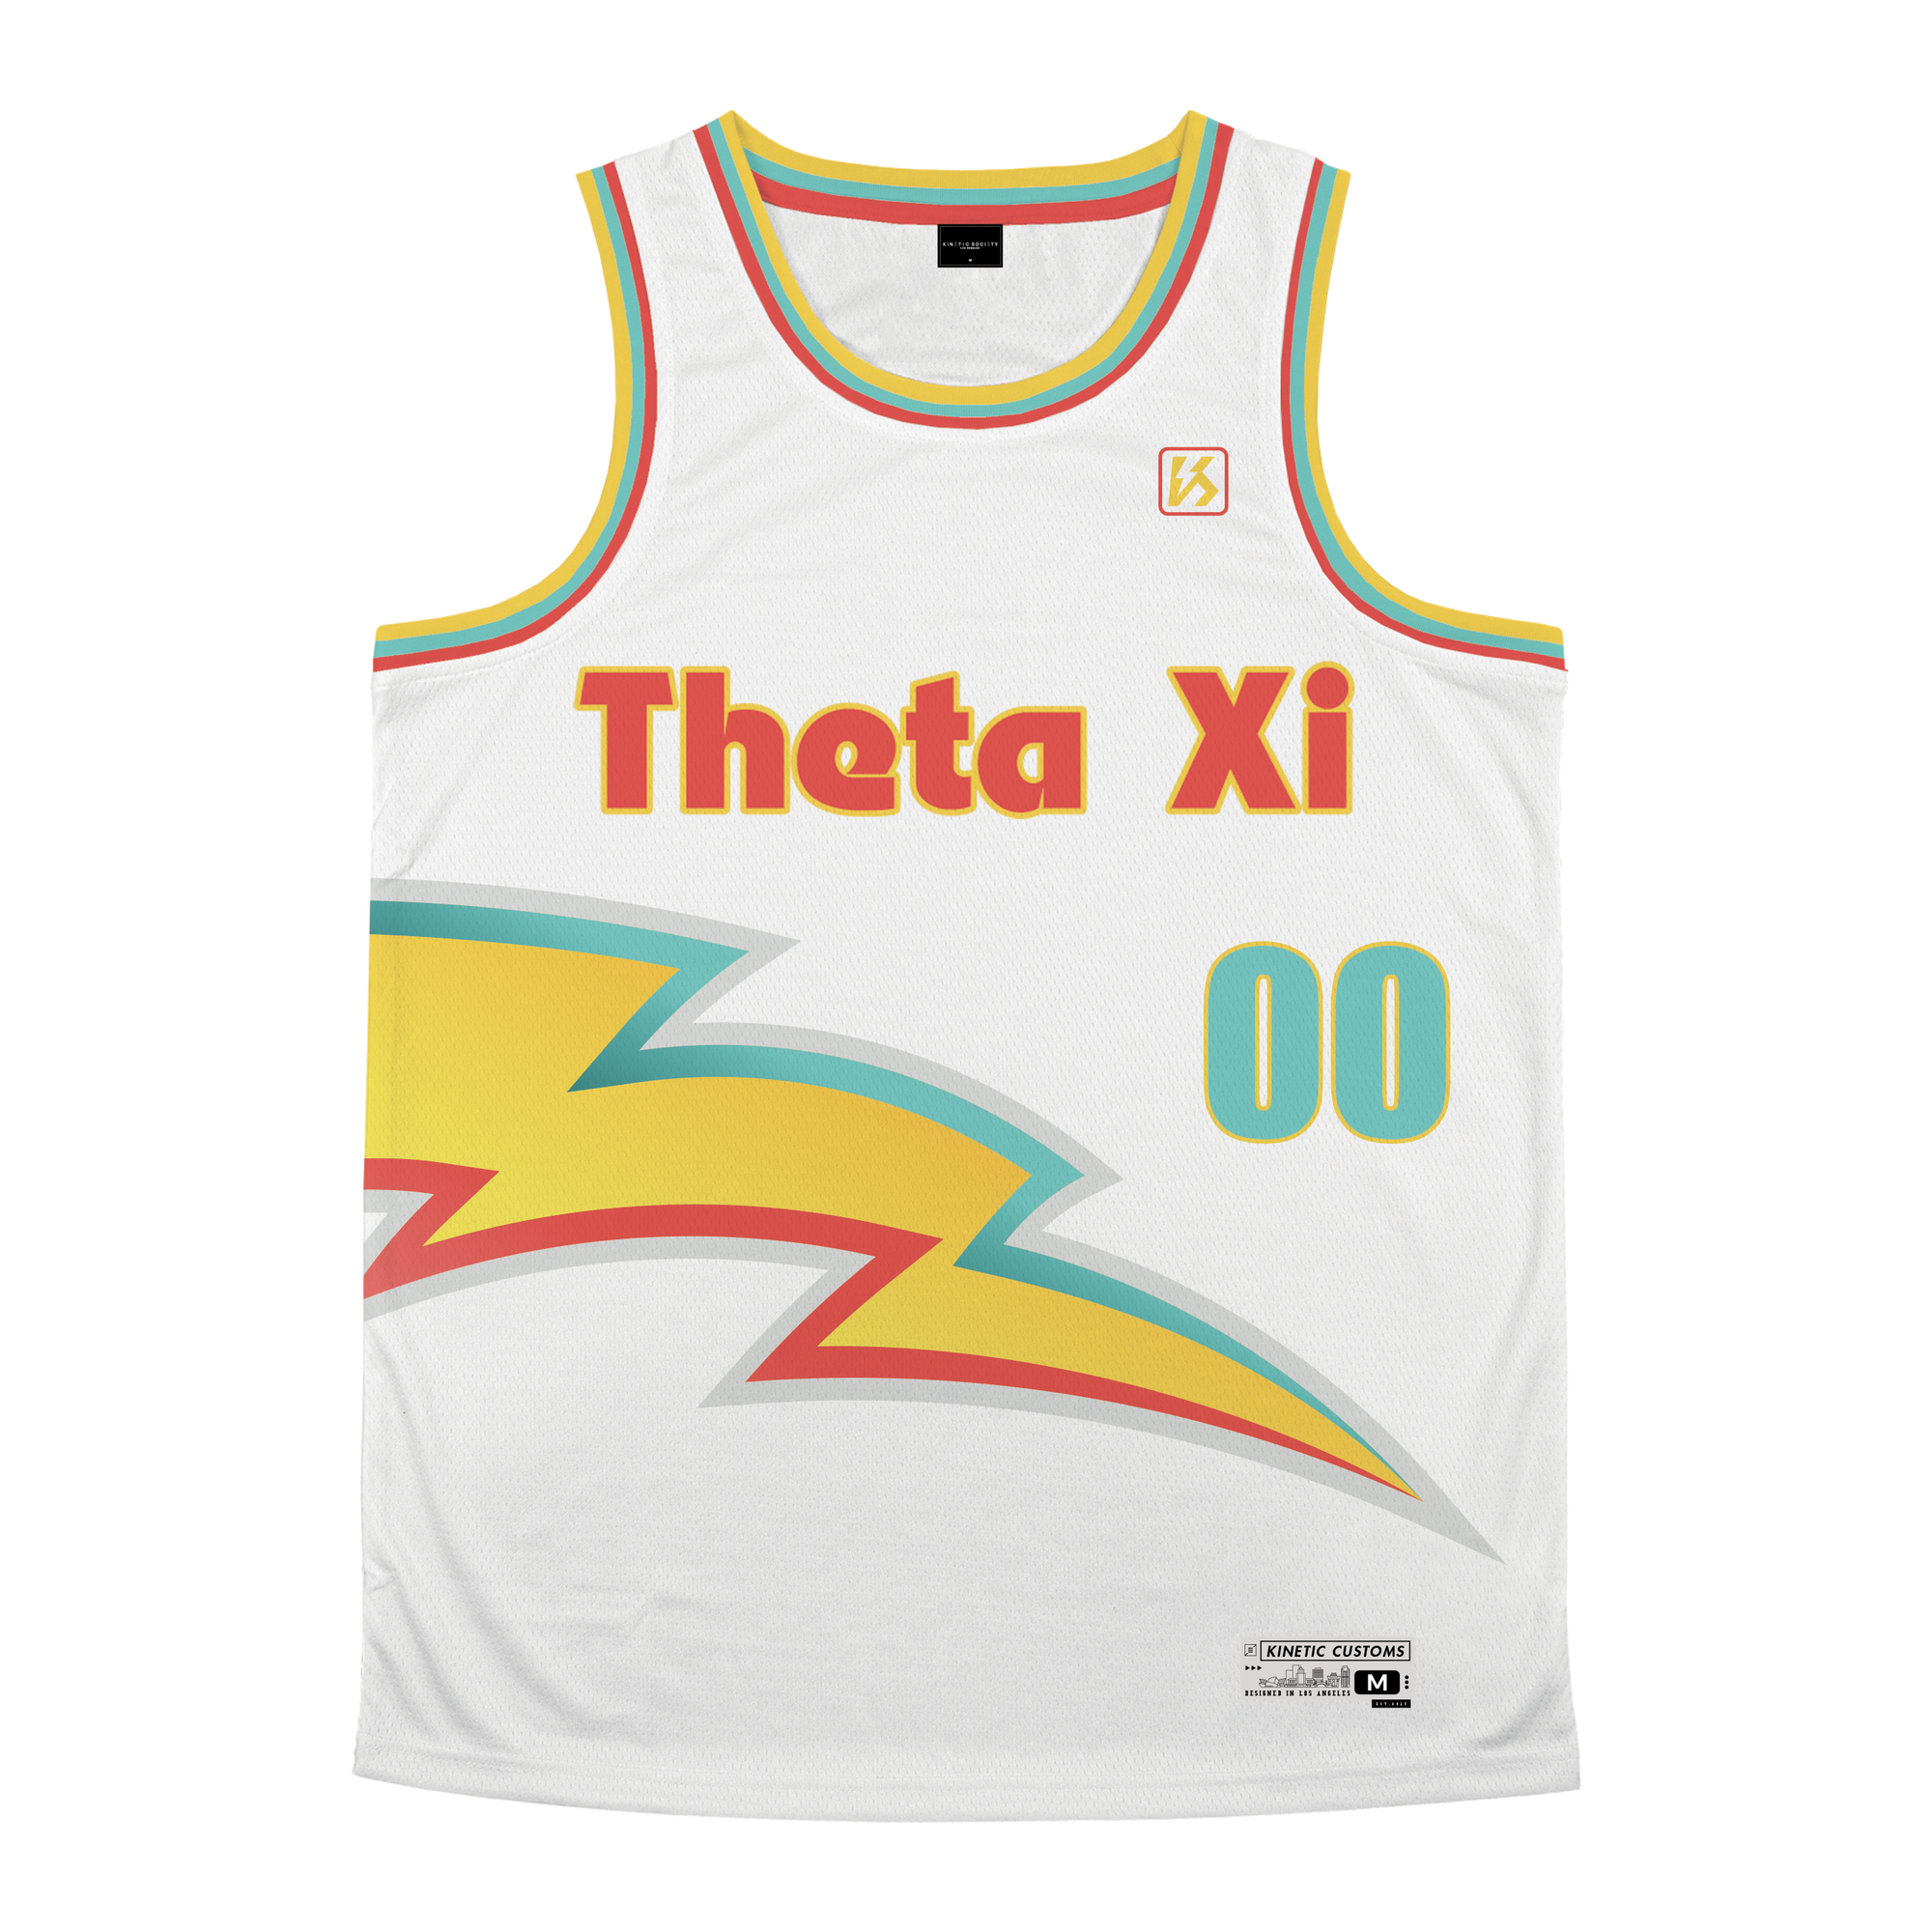 Theta Xi - Bolt Basketball Jersey